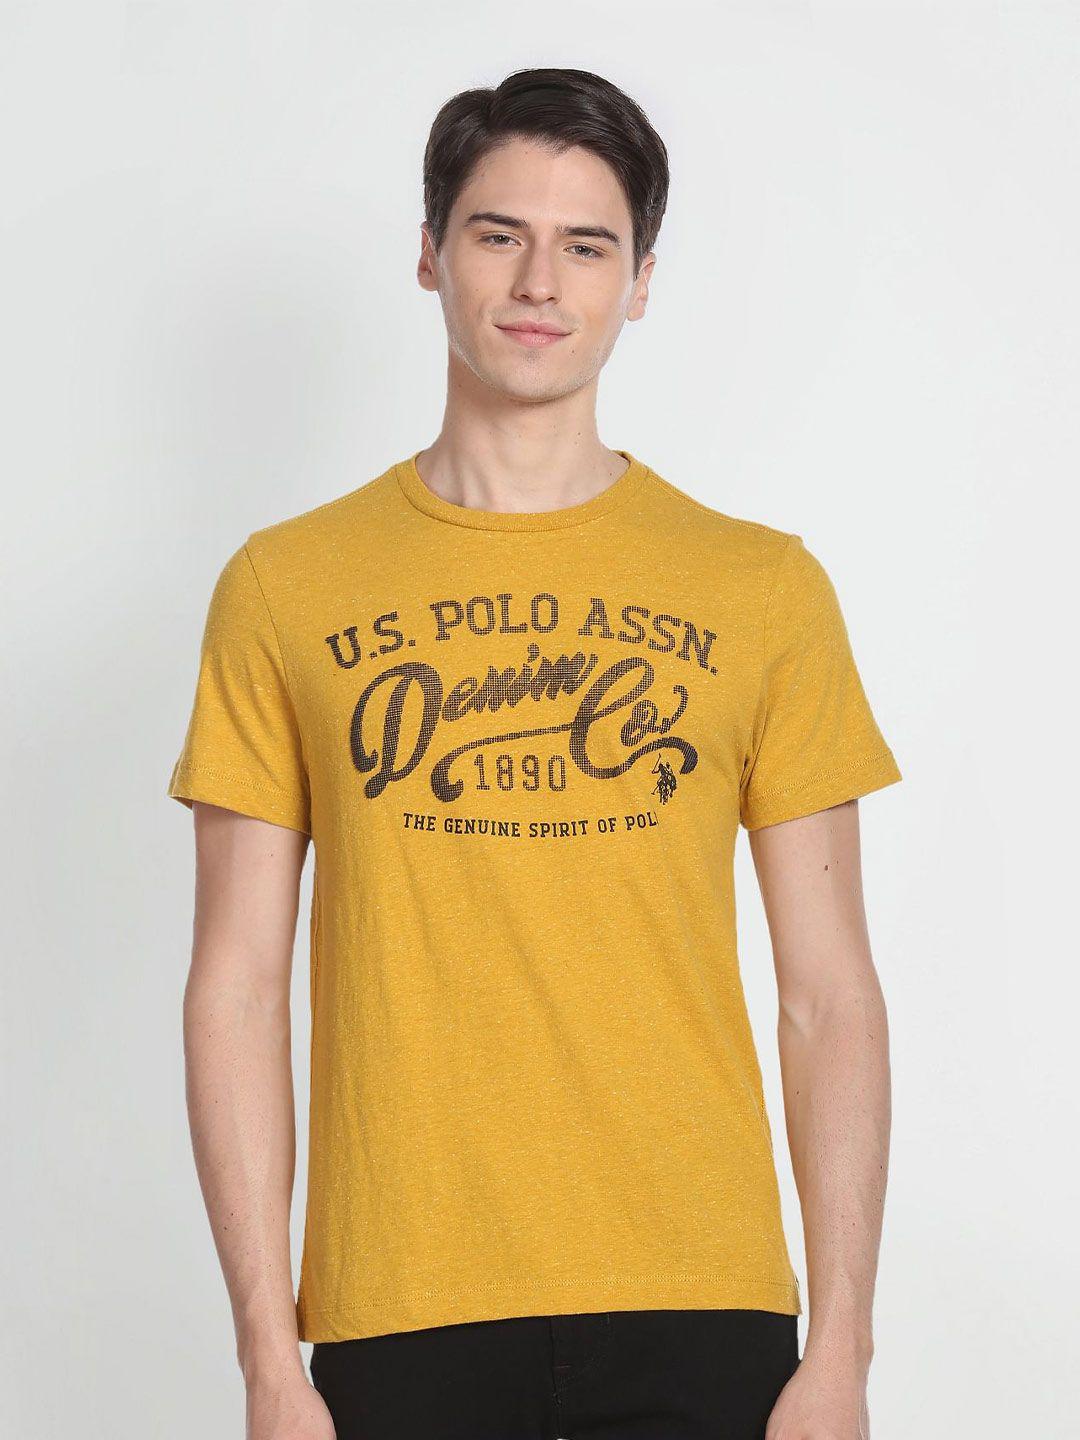 u.s. polo assn. denim co. brand logo printed cotton t-shirt